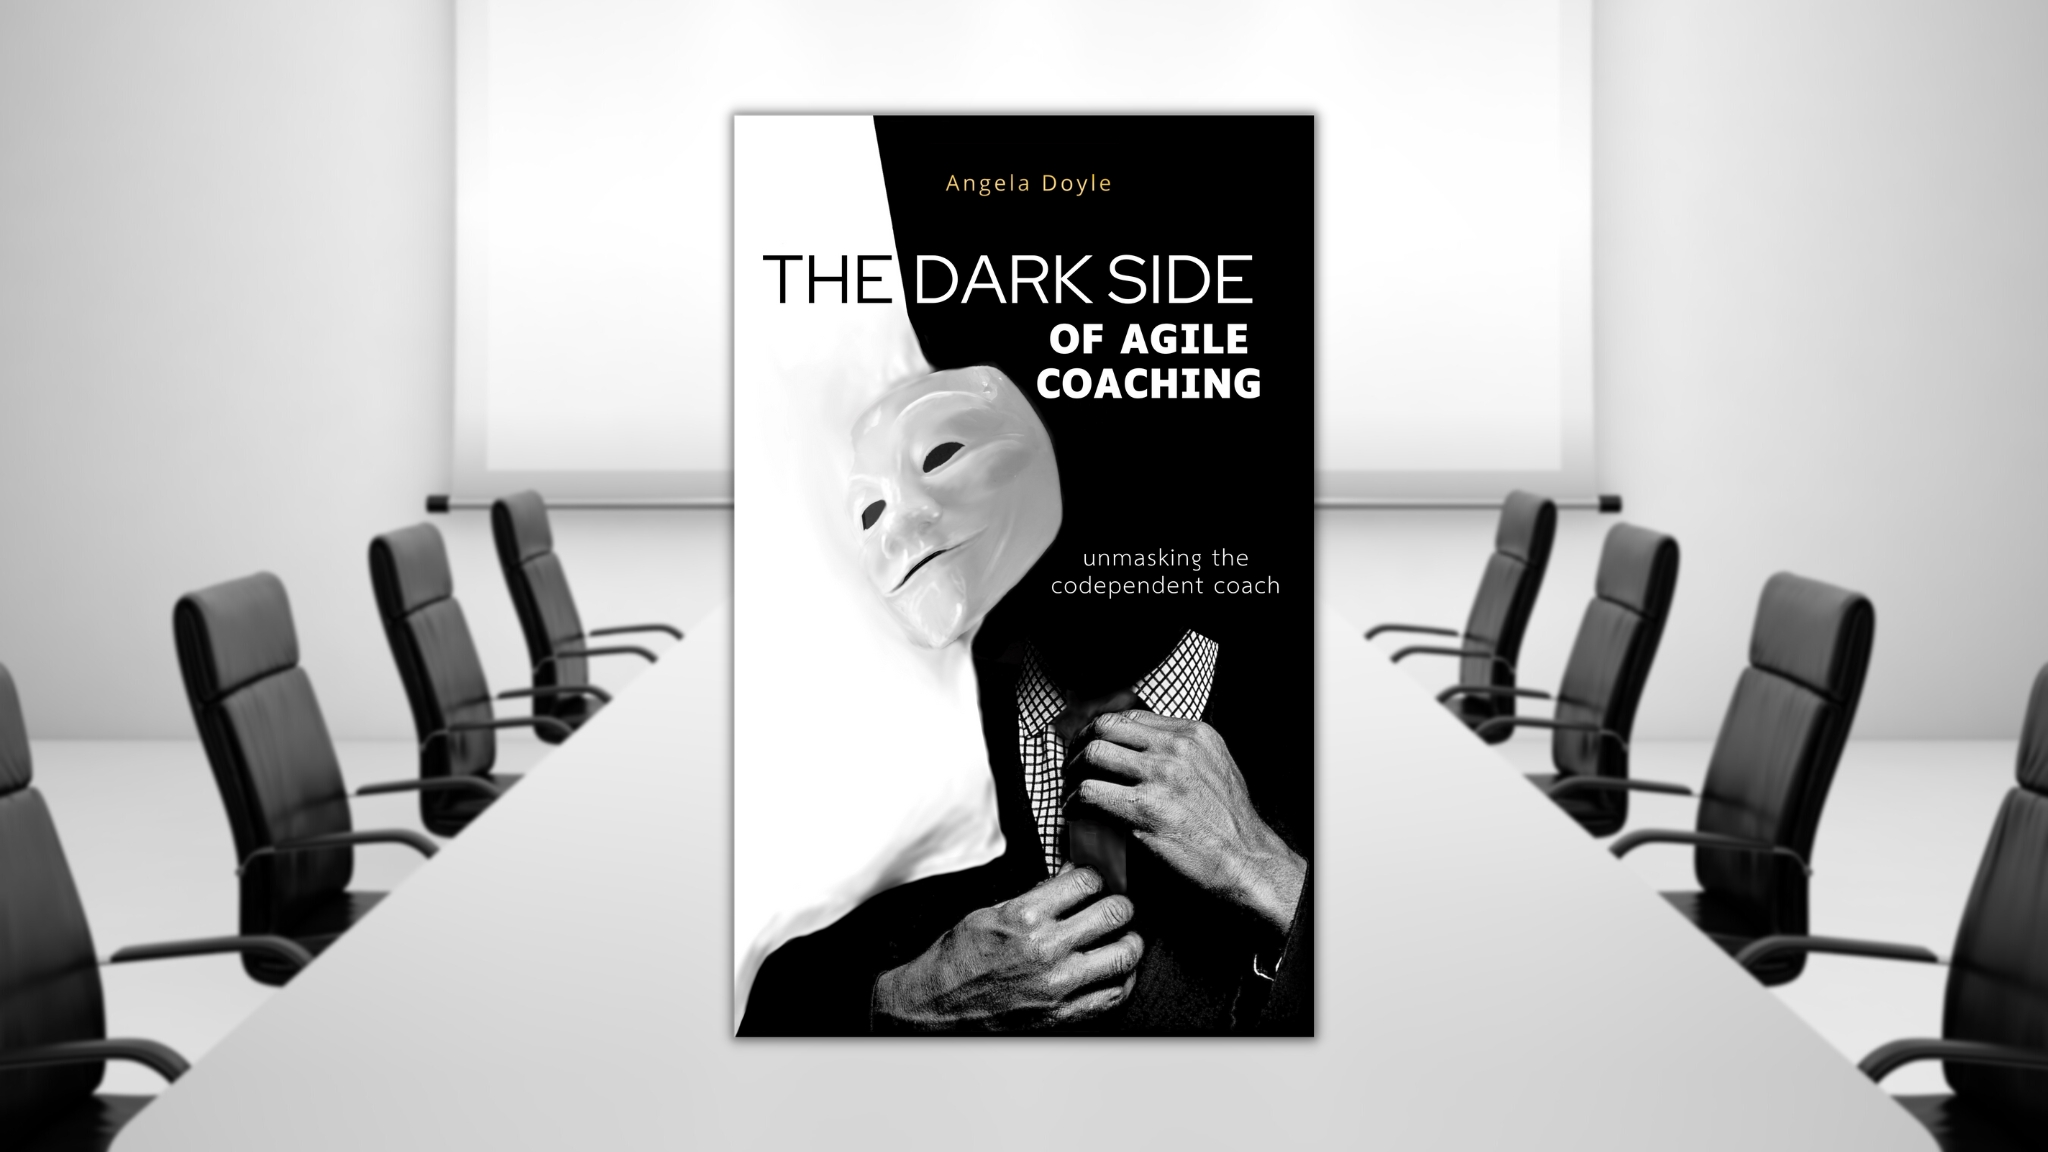 The Dark Side of Agile Coaching by Angela Doyle